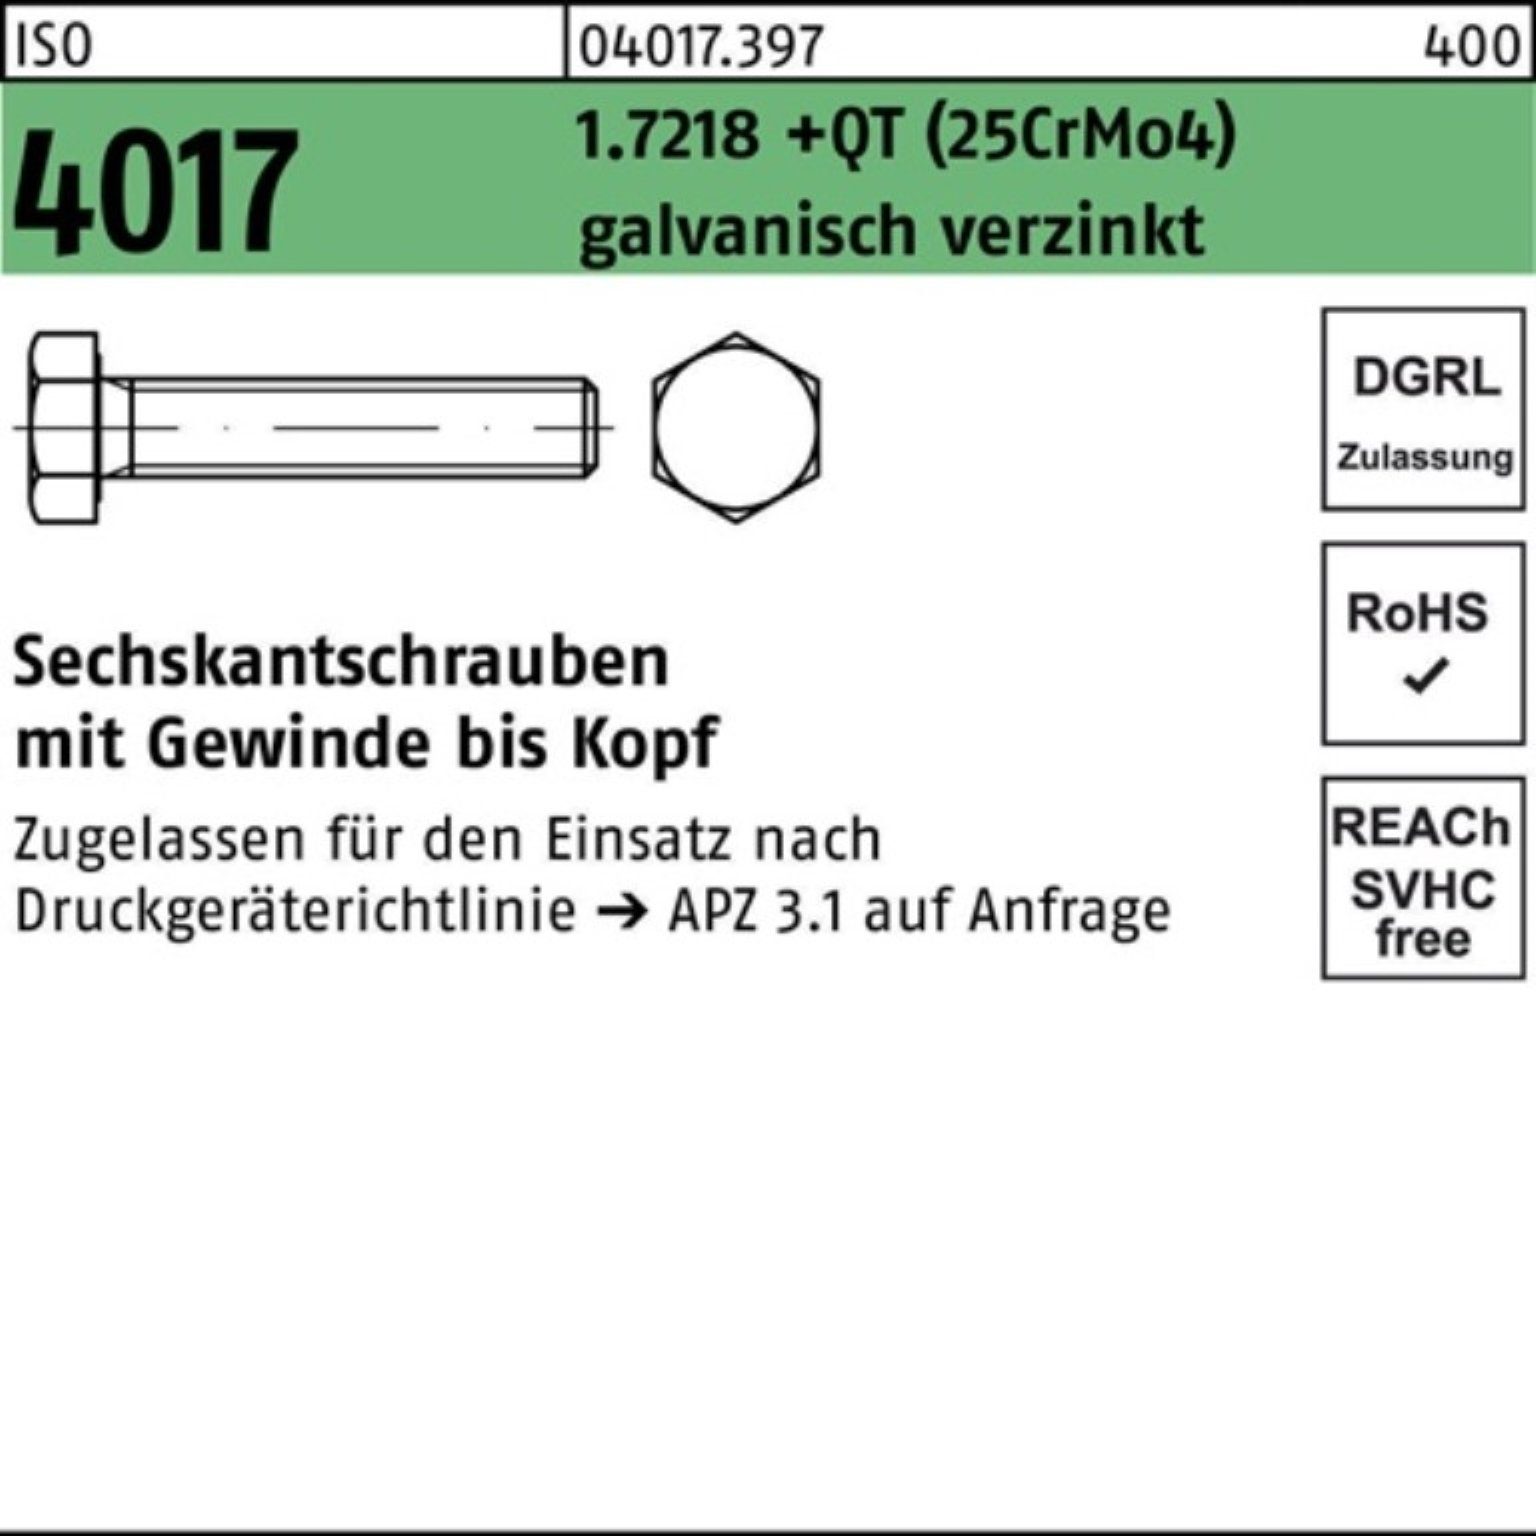 (25CrMo4) +QT VG Sechskantschraube Bufab M27x95 4017 100er Pack 1.7218 ISO g Sechskantschraube